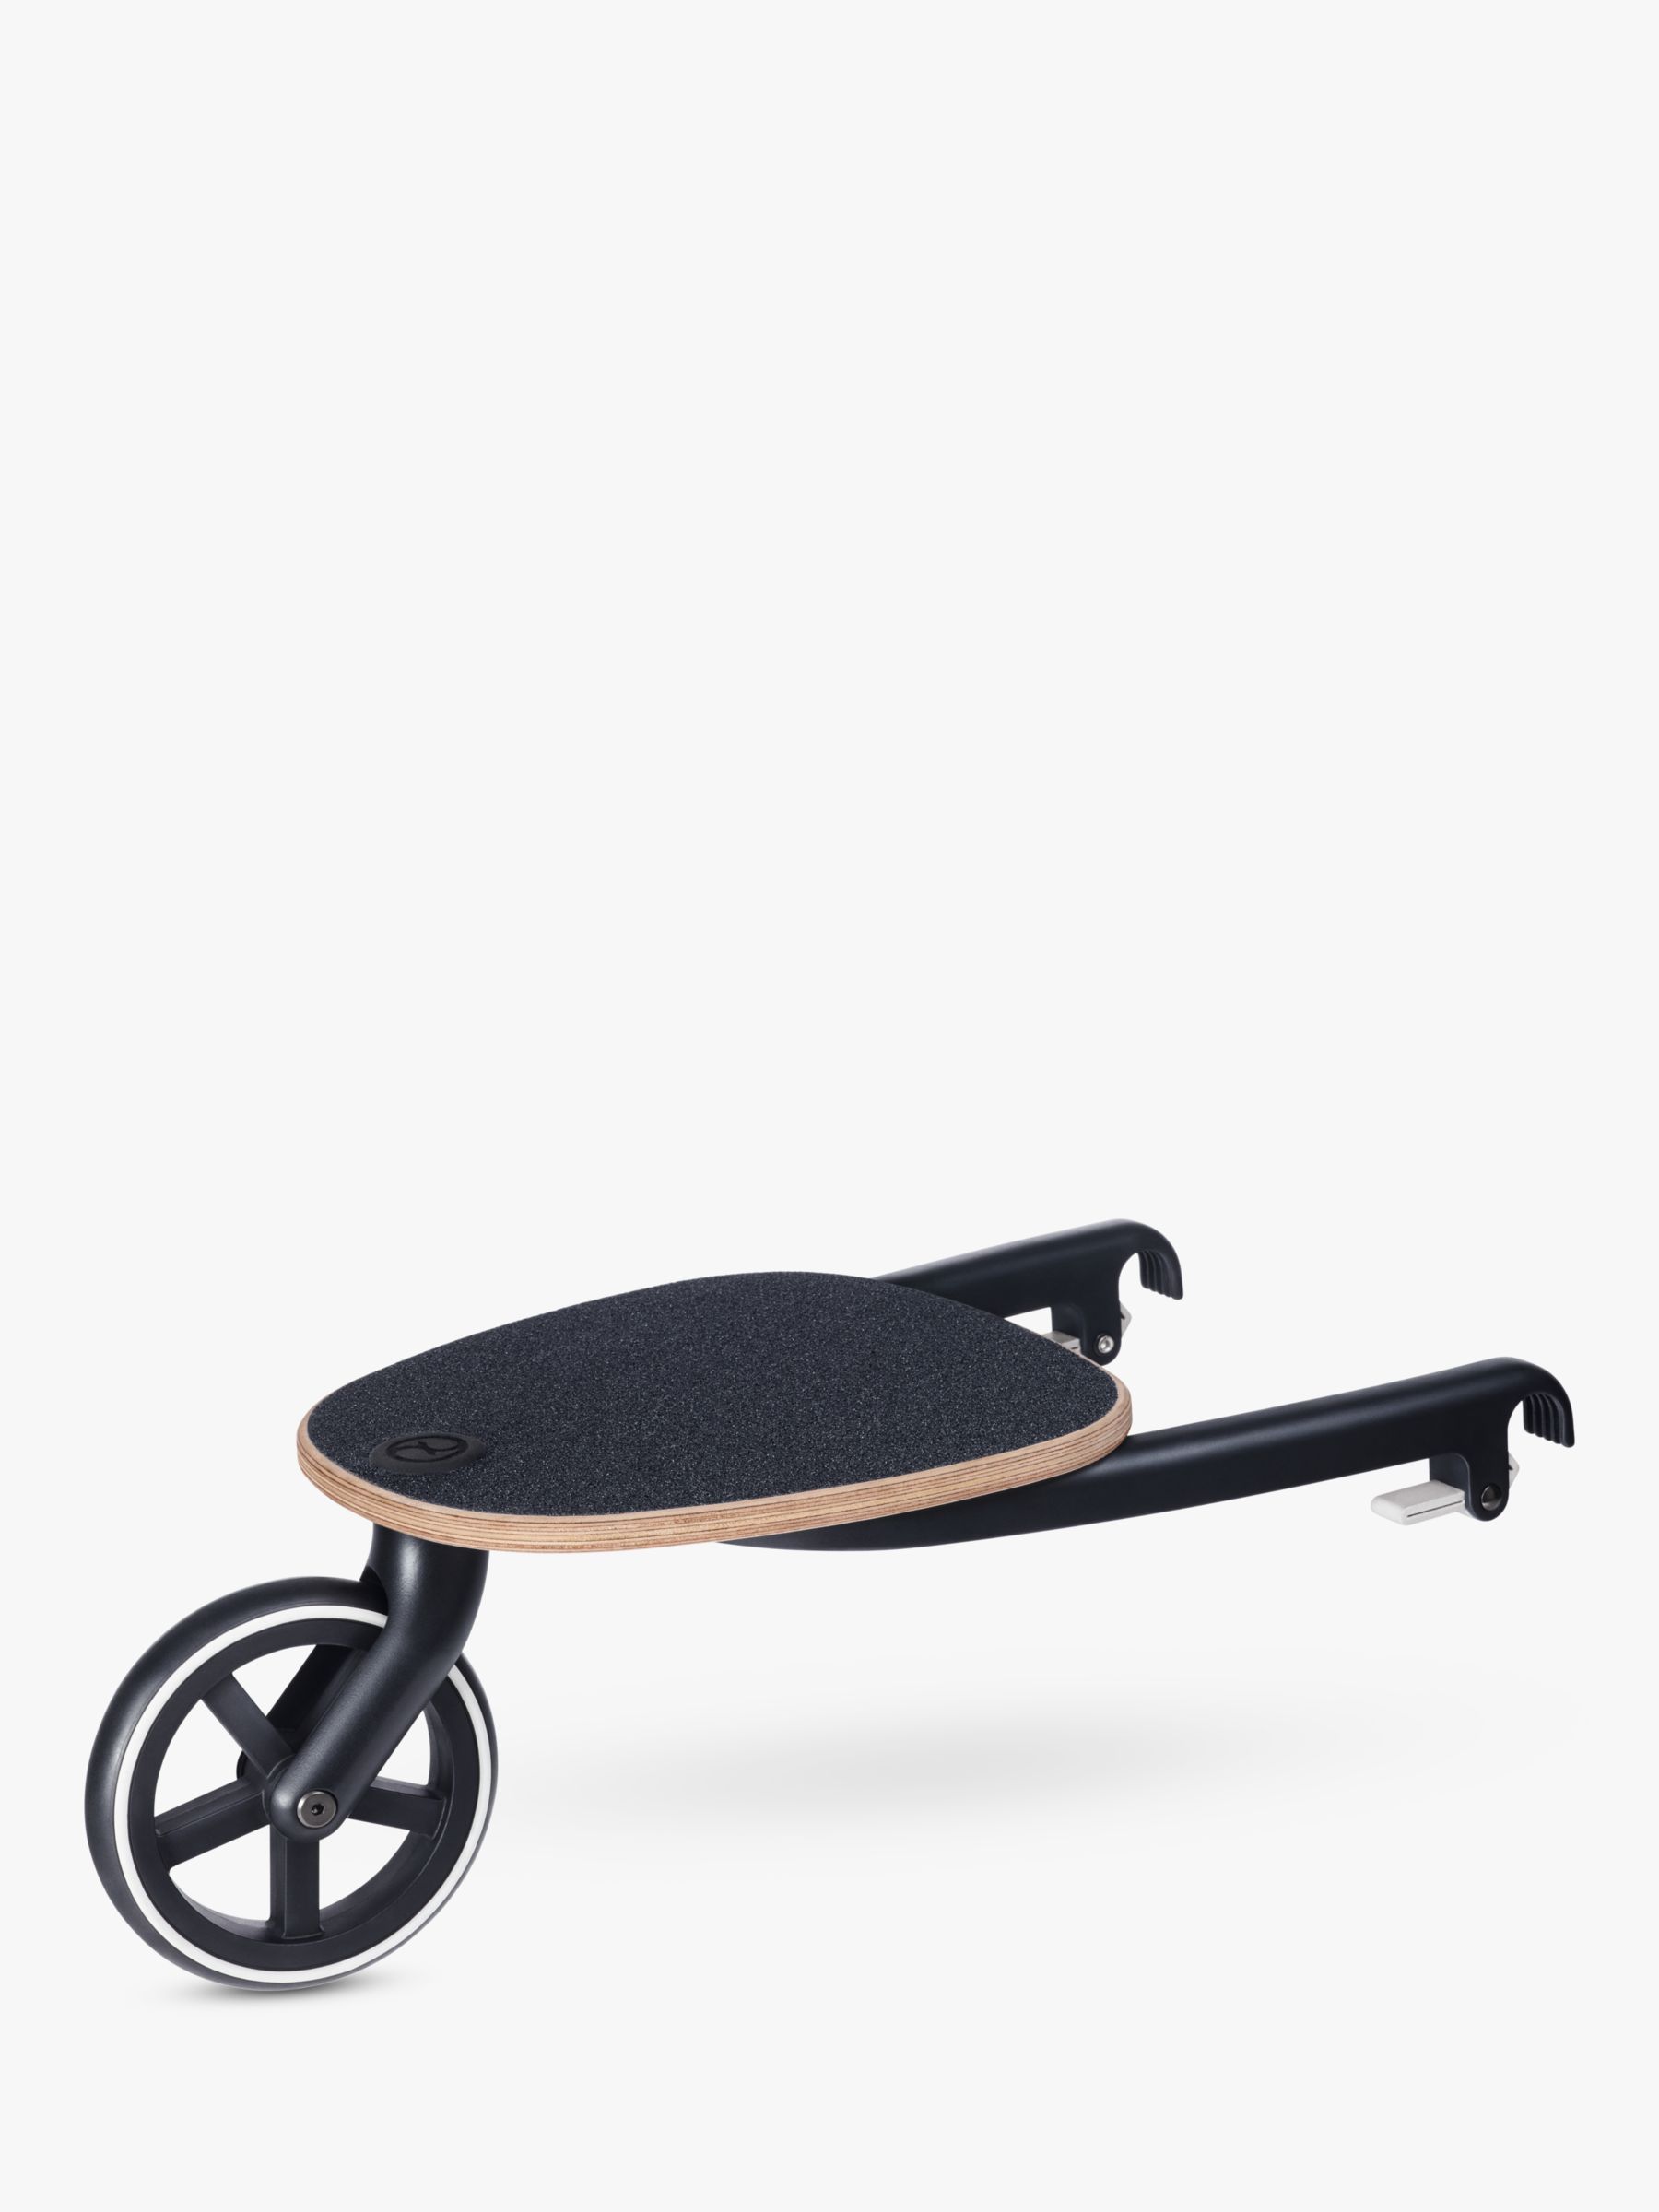 Image of Cybex Childrens Wheeled Board Black